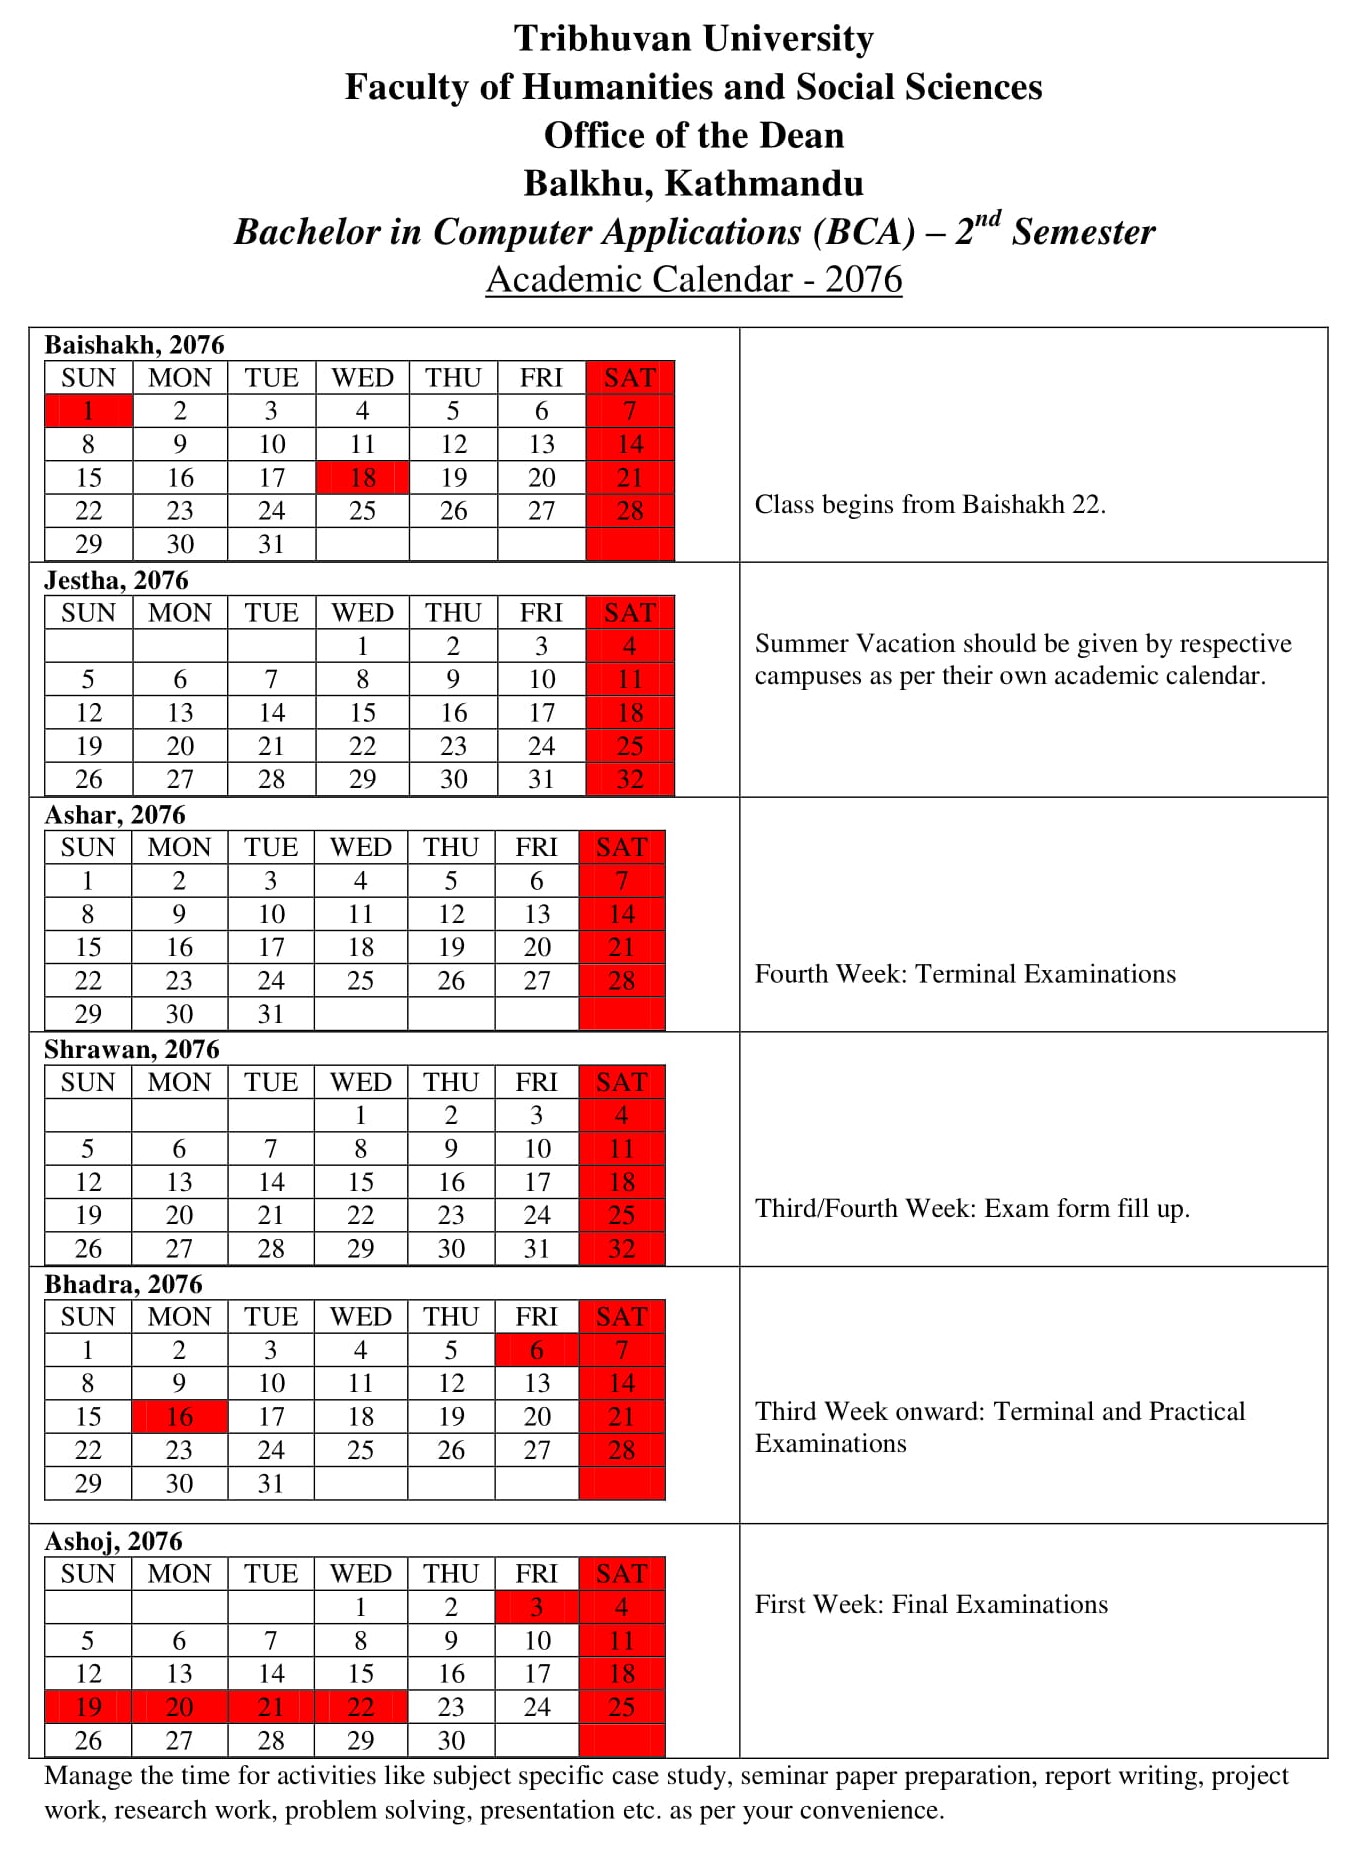 BCA Second Semester Academic Calendar 2076 Tribhuvan University